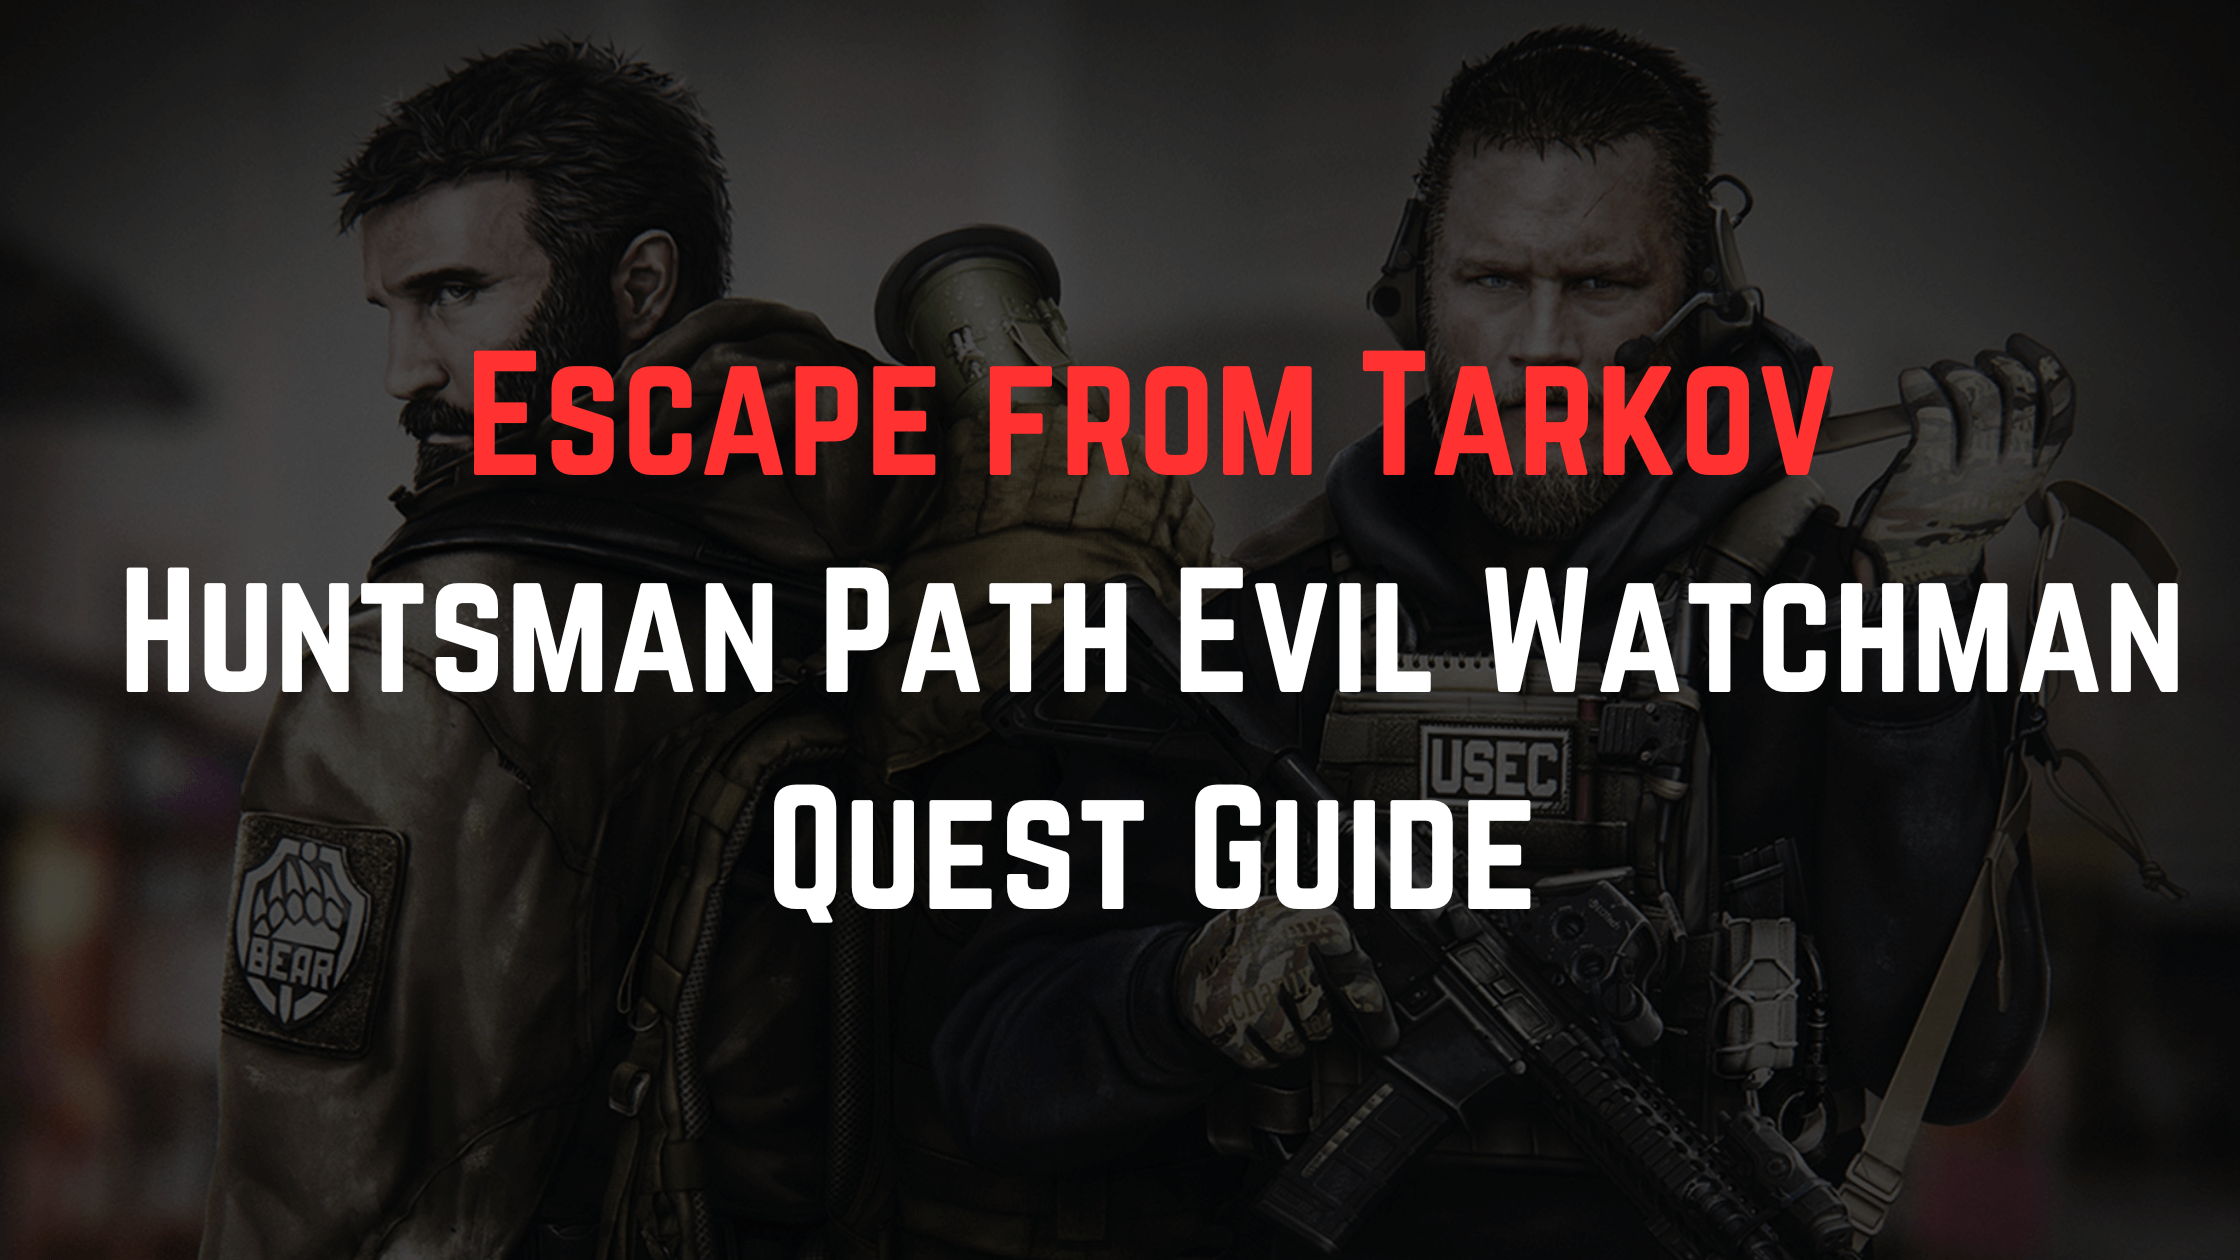 Escape from Tarkov: Huntsman Path Evil Watchman Quest Guide